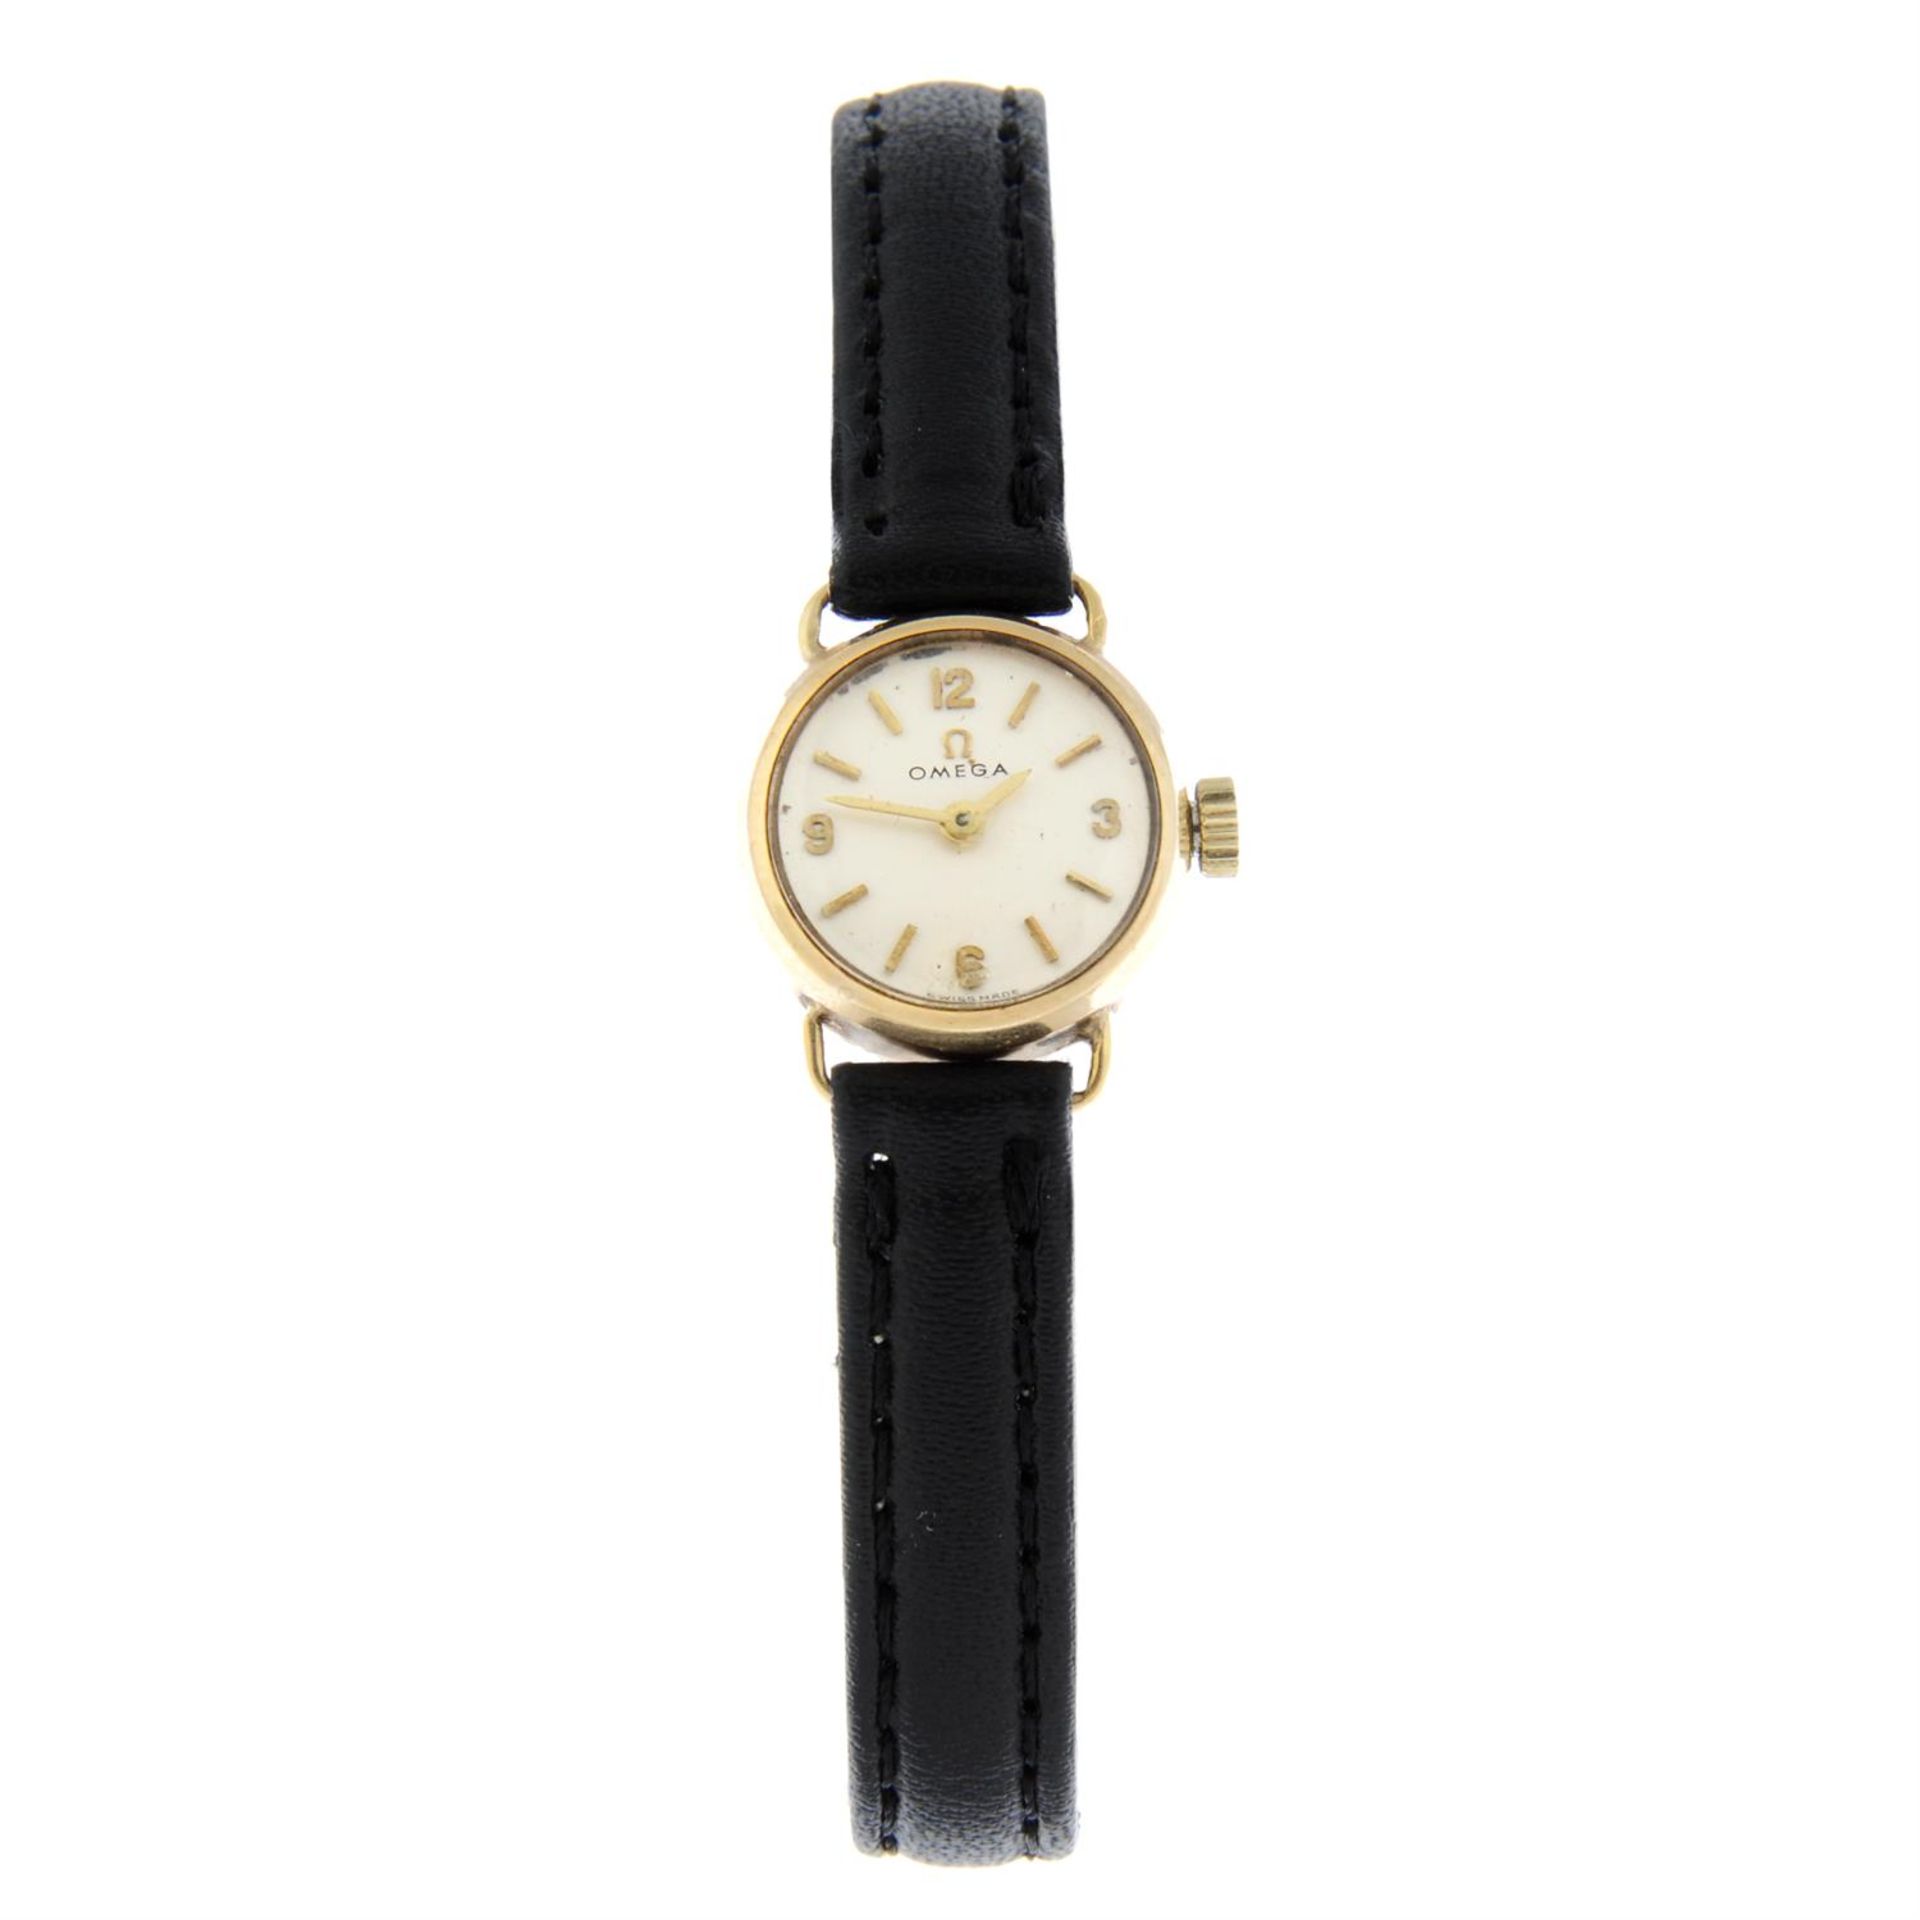 OMEGA - a 9ct yellow gold wrist watch, 16mm.